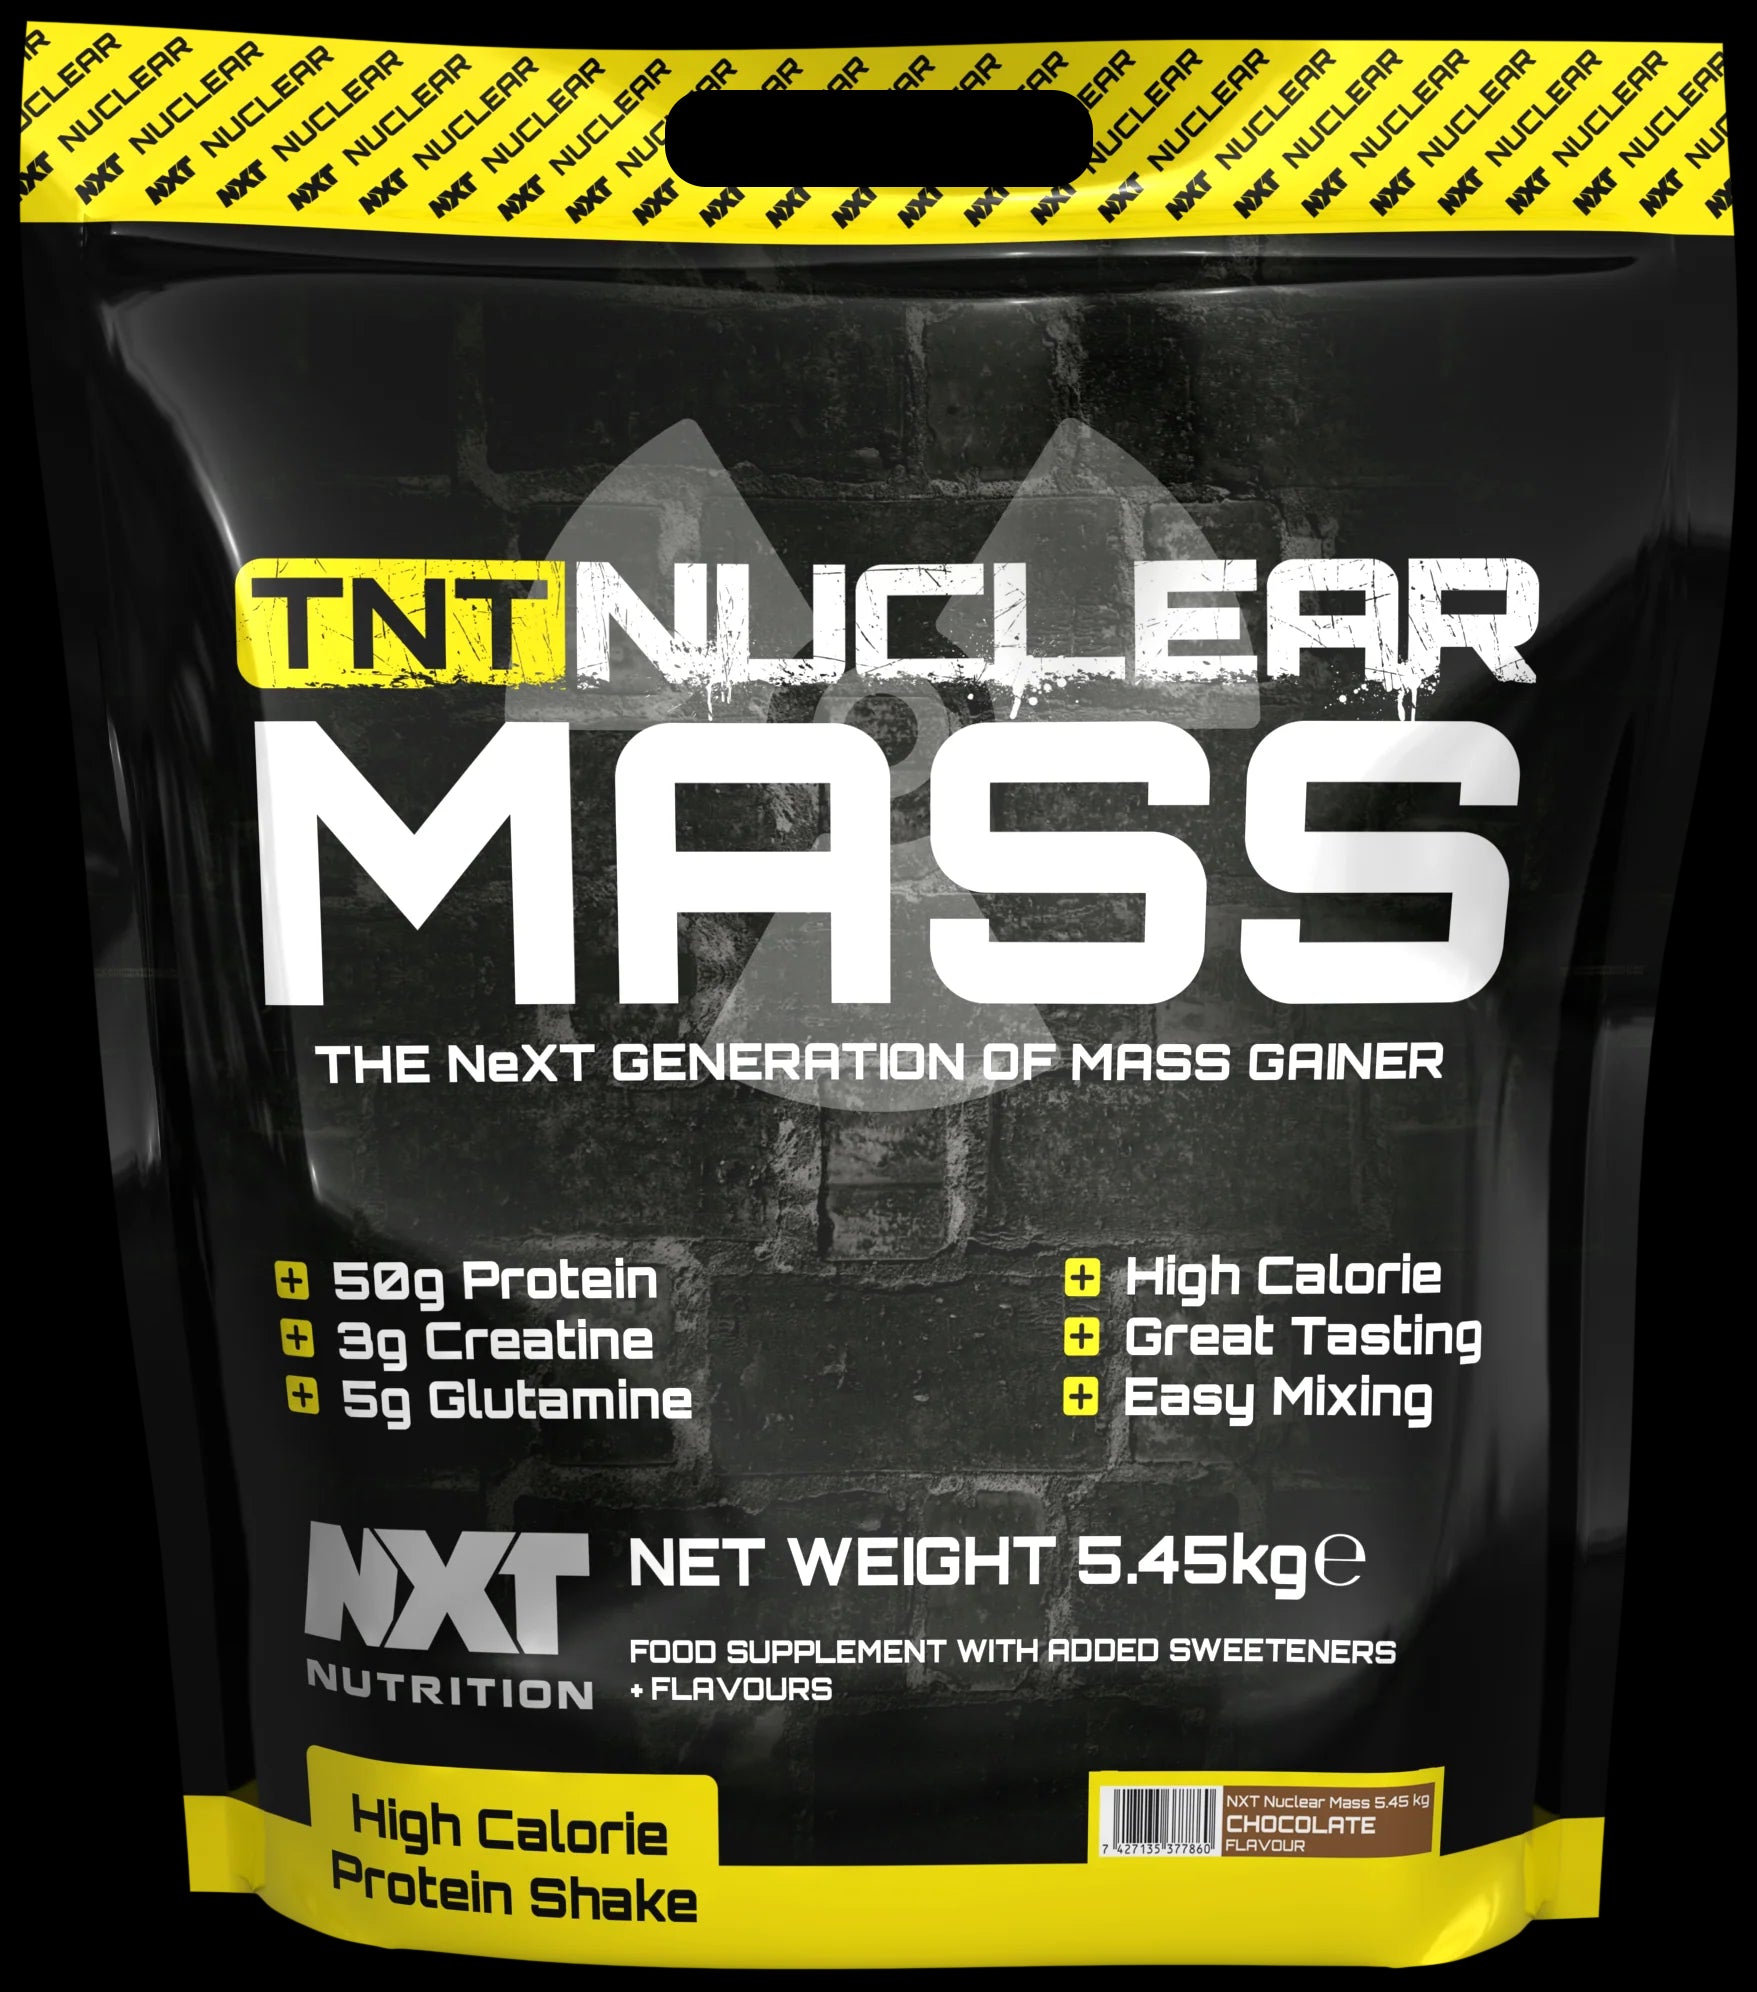 NXT Nutrition TNT Nuclear Mass 5.4kg